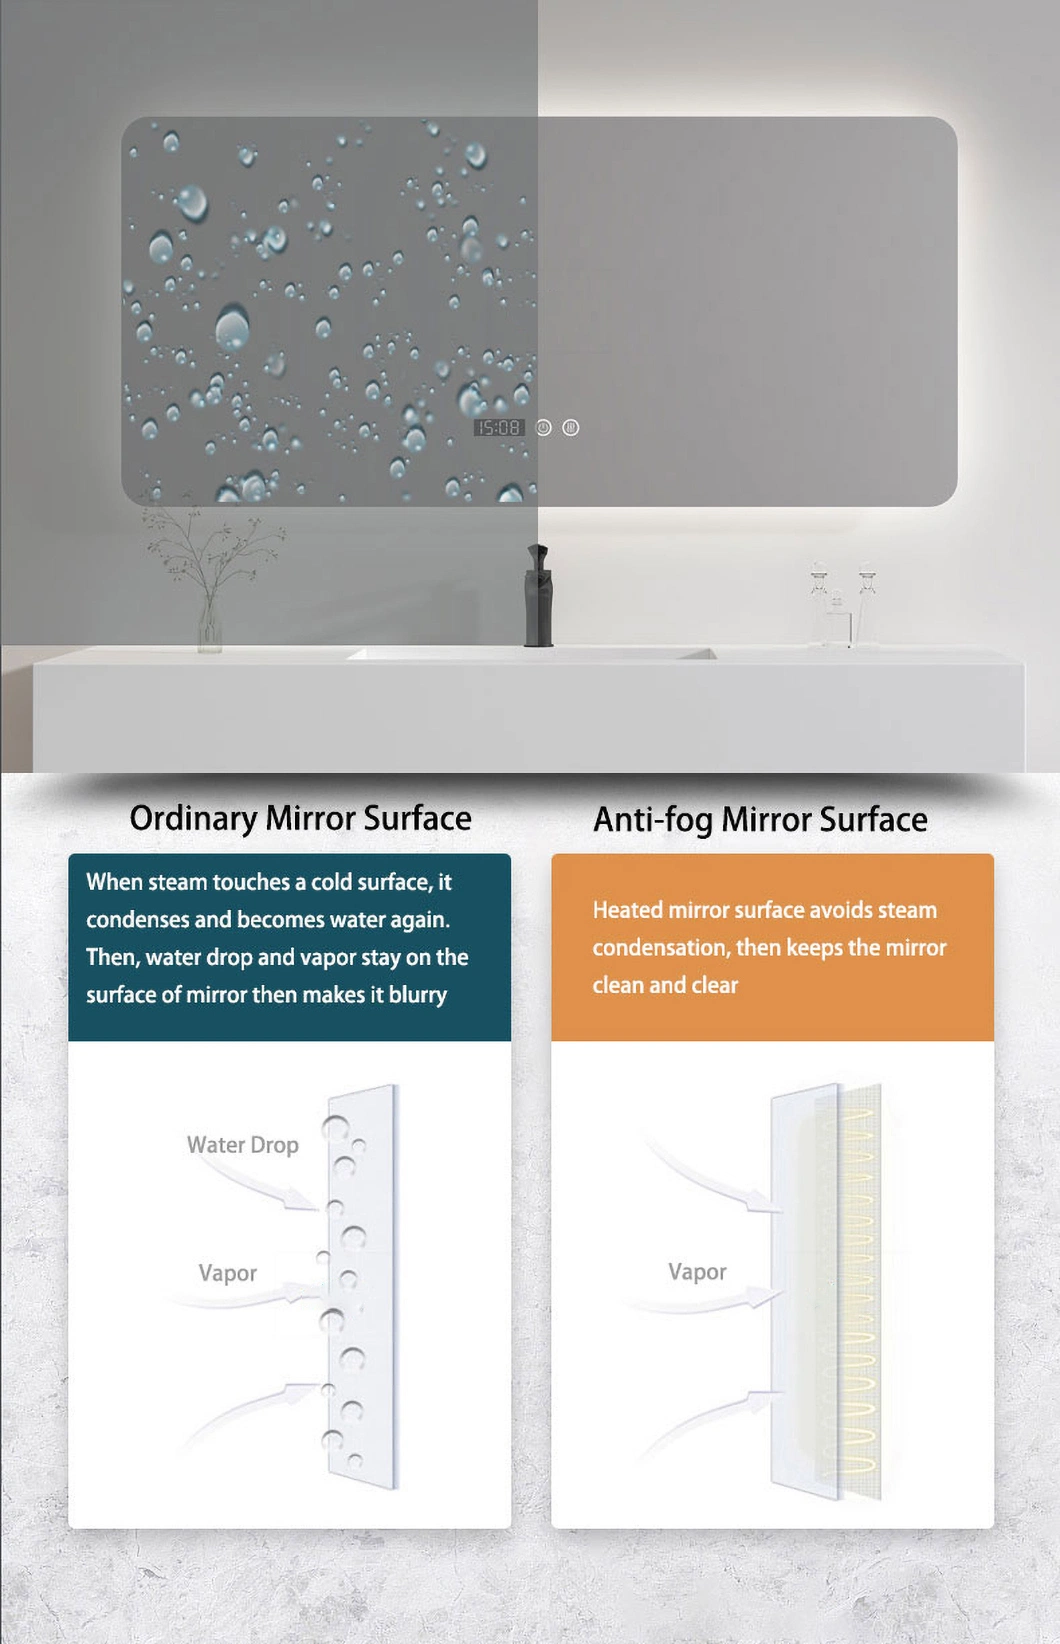 OEM Simple Modern Yuanbao Integrated Wash Basin Sink Bathroom Hotel Washstand Solid Wood Bathroom Cabinet with Mirror